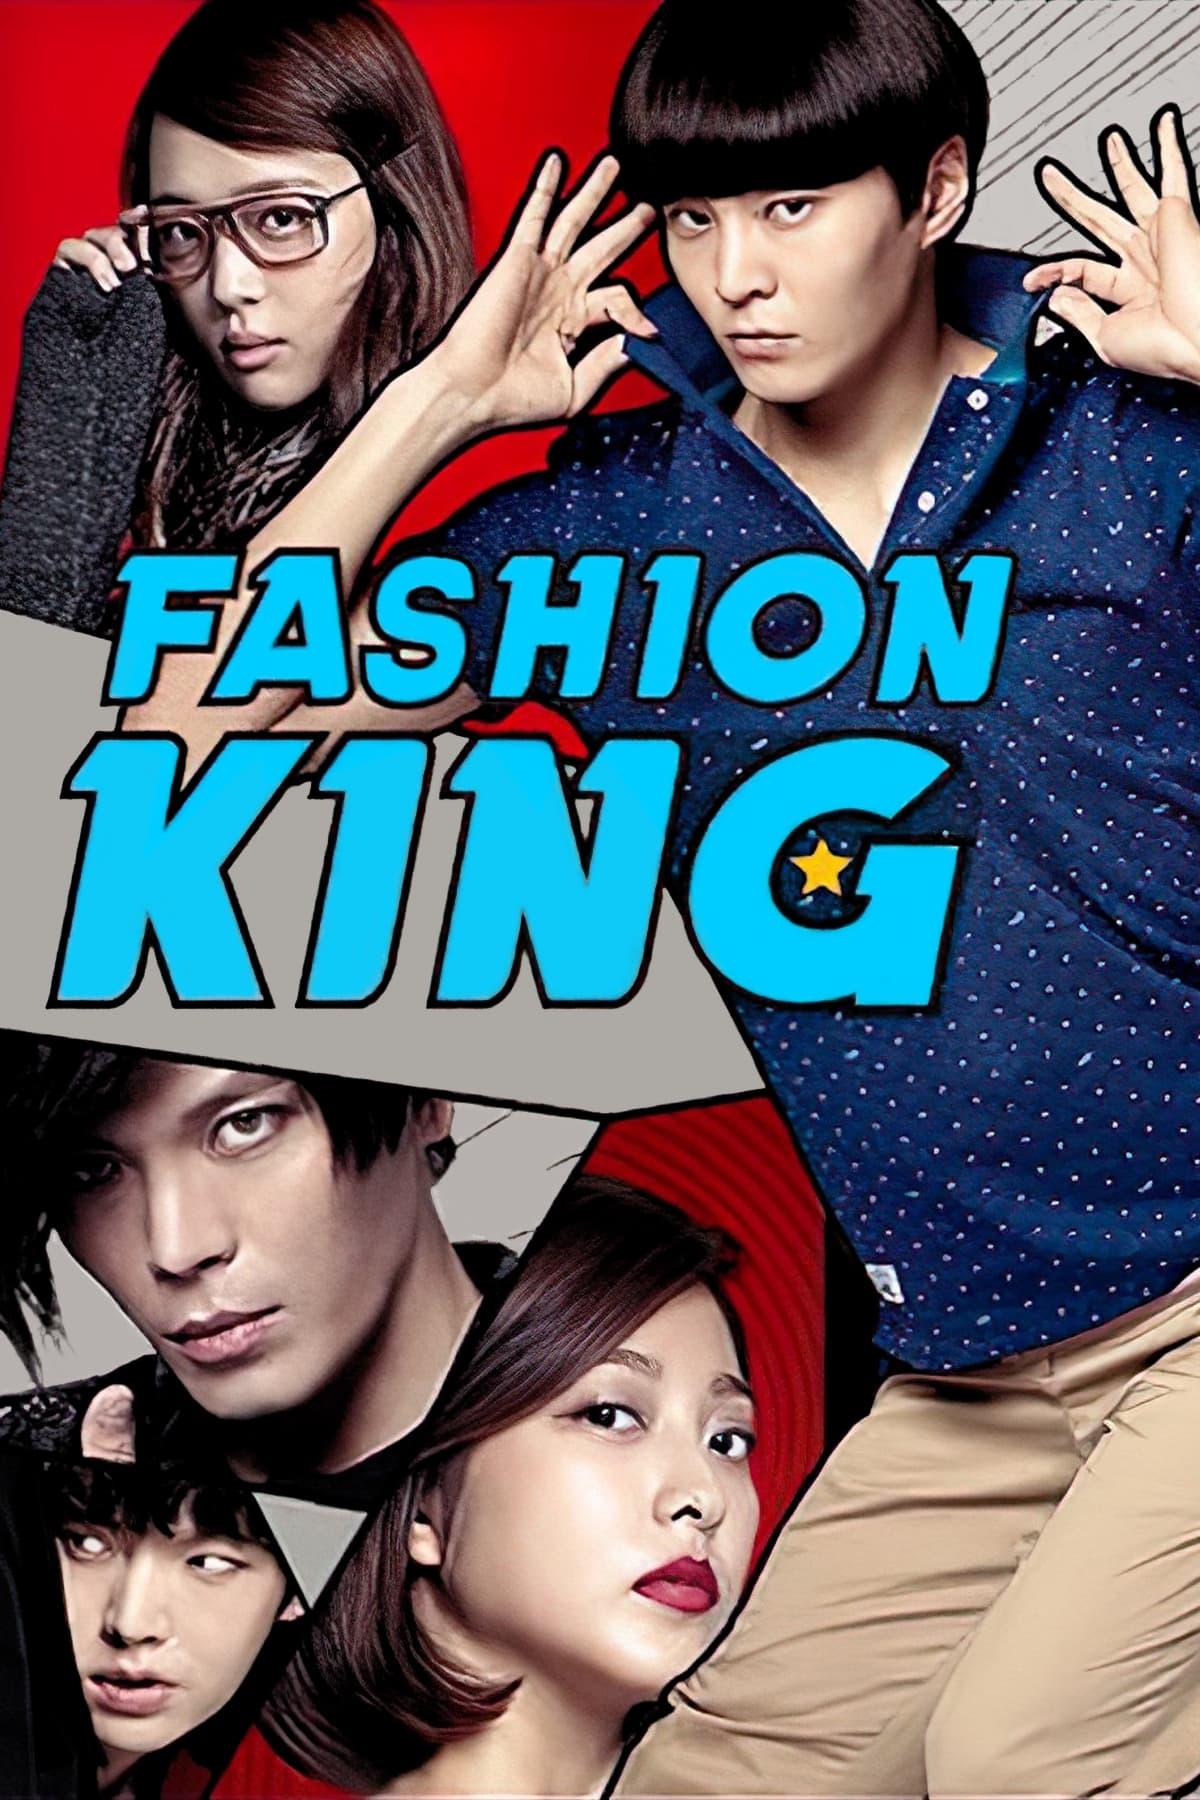 Fashion King poster